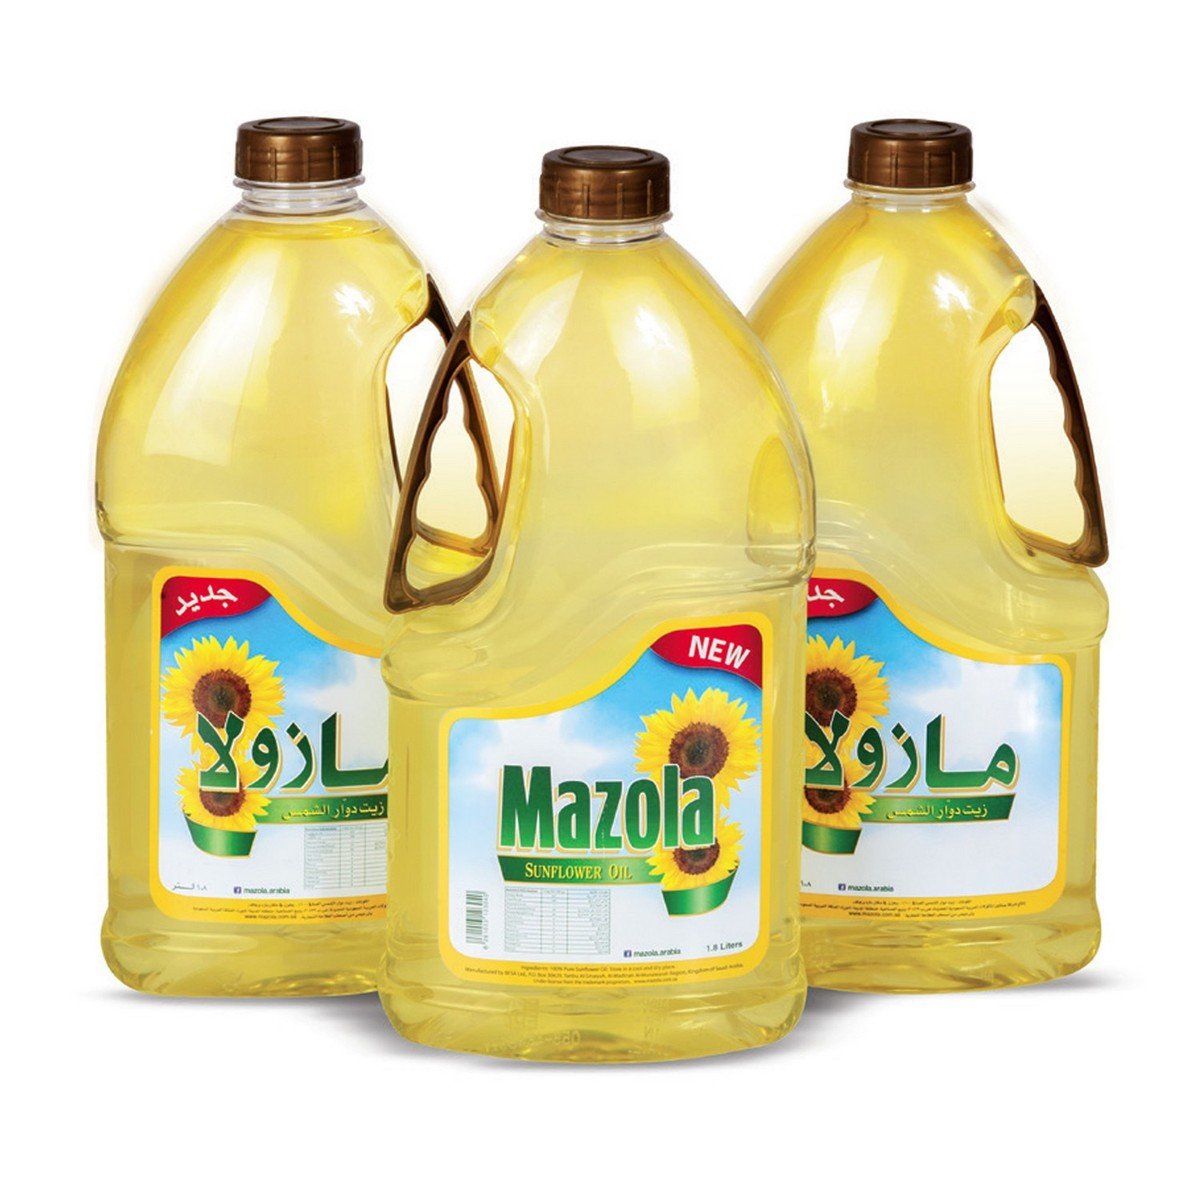 Mazola Sunflower Oil 1.8Litre x 3pcs